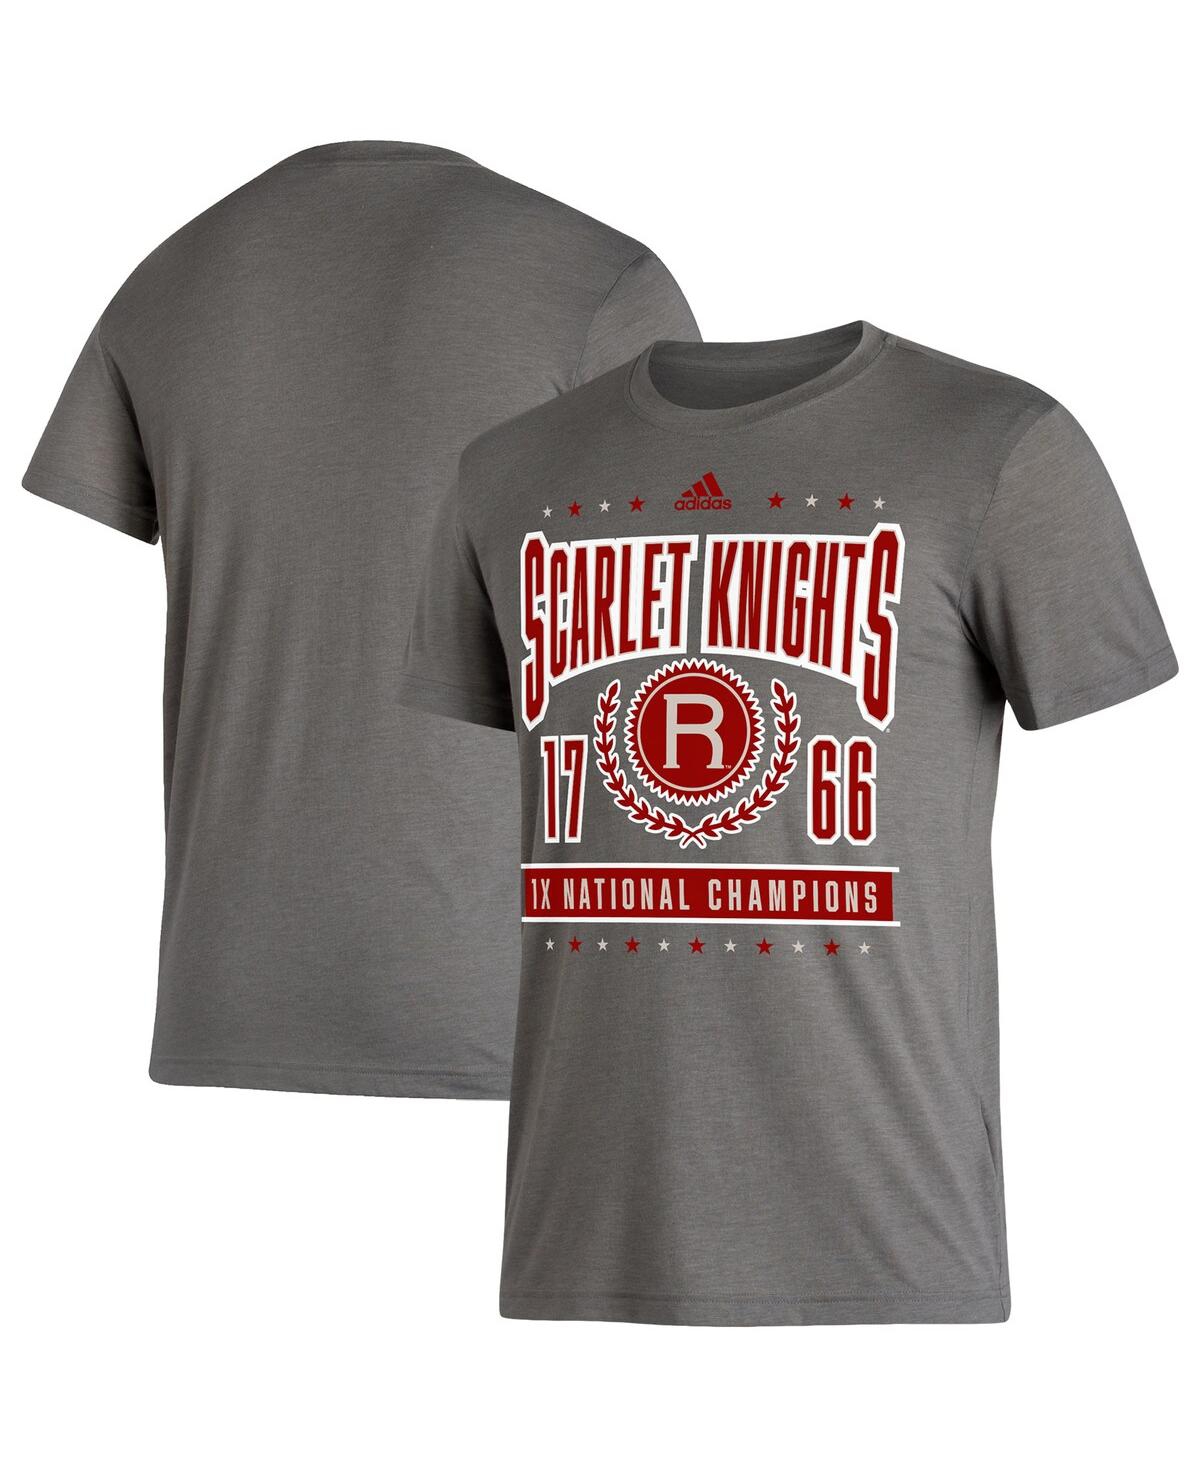 Adidas Originals Men's Adidas Heathered Charcoal Rutgers Scarlet Knights 1x National Champions Reminisce T-shirt